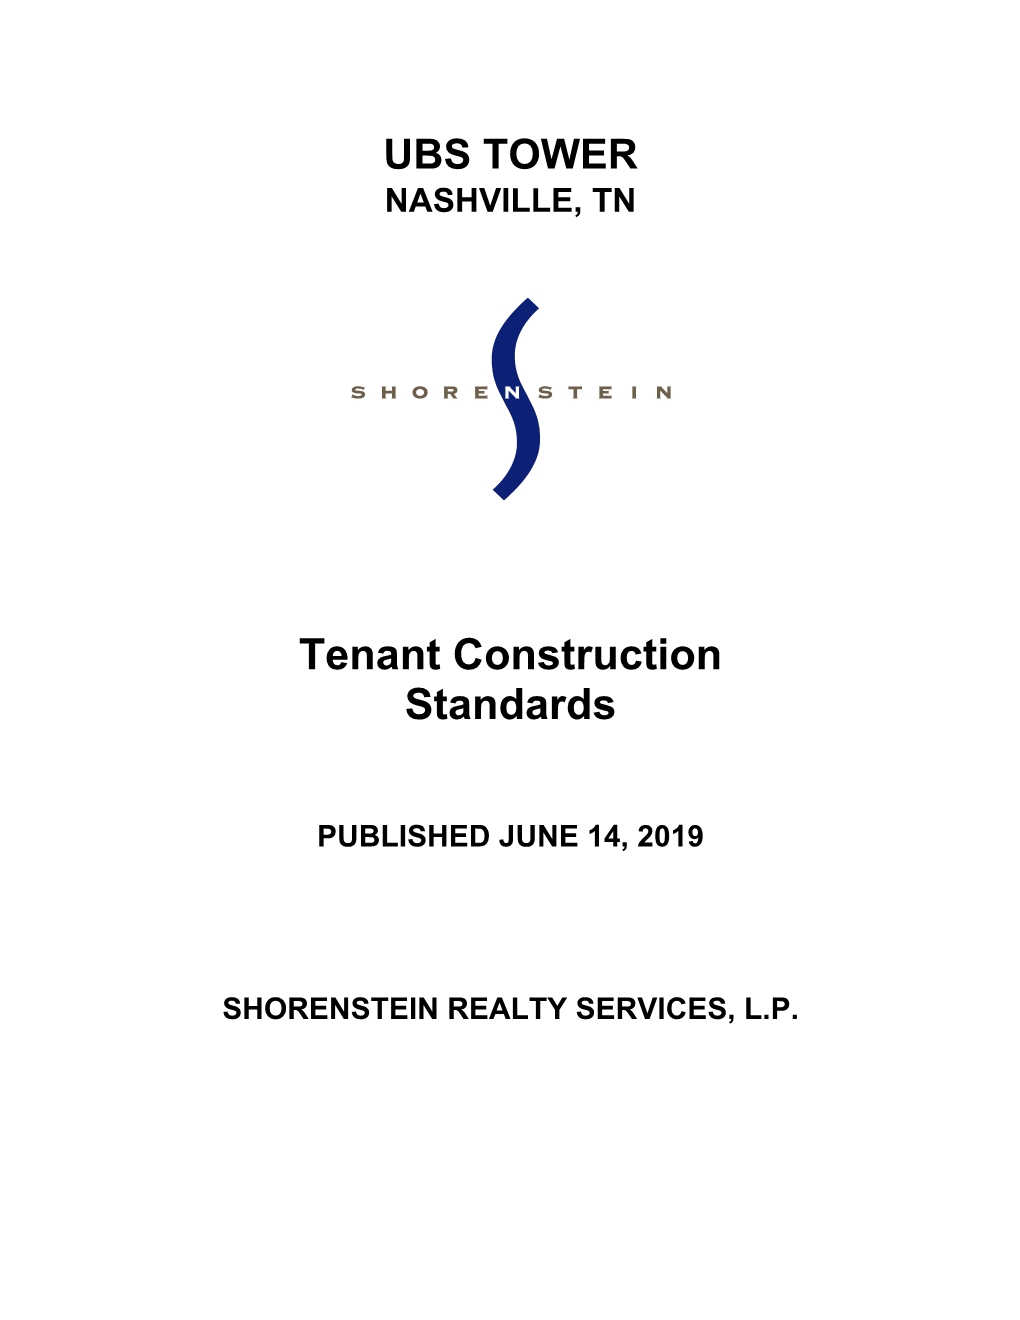 Tenant Construction Standards Template